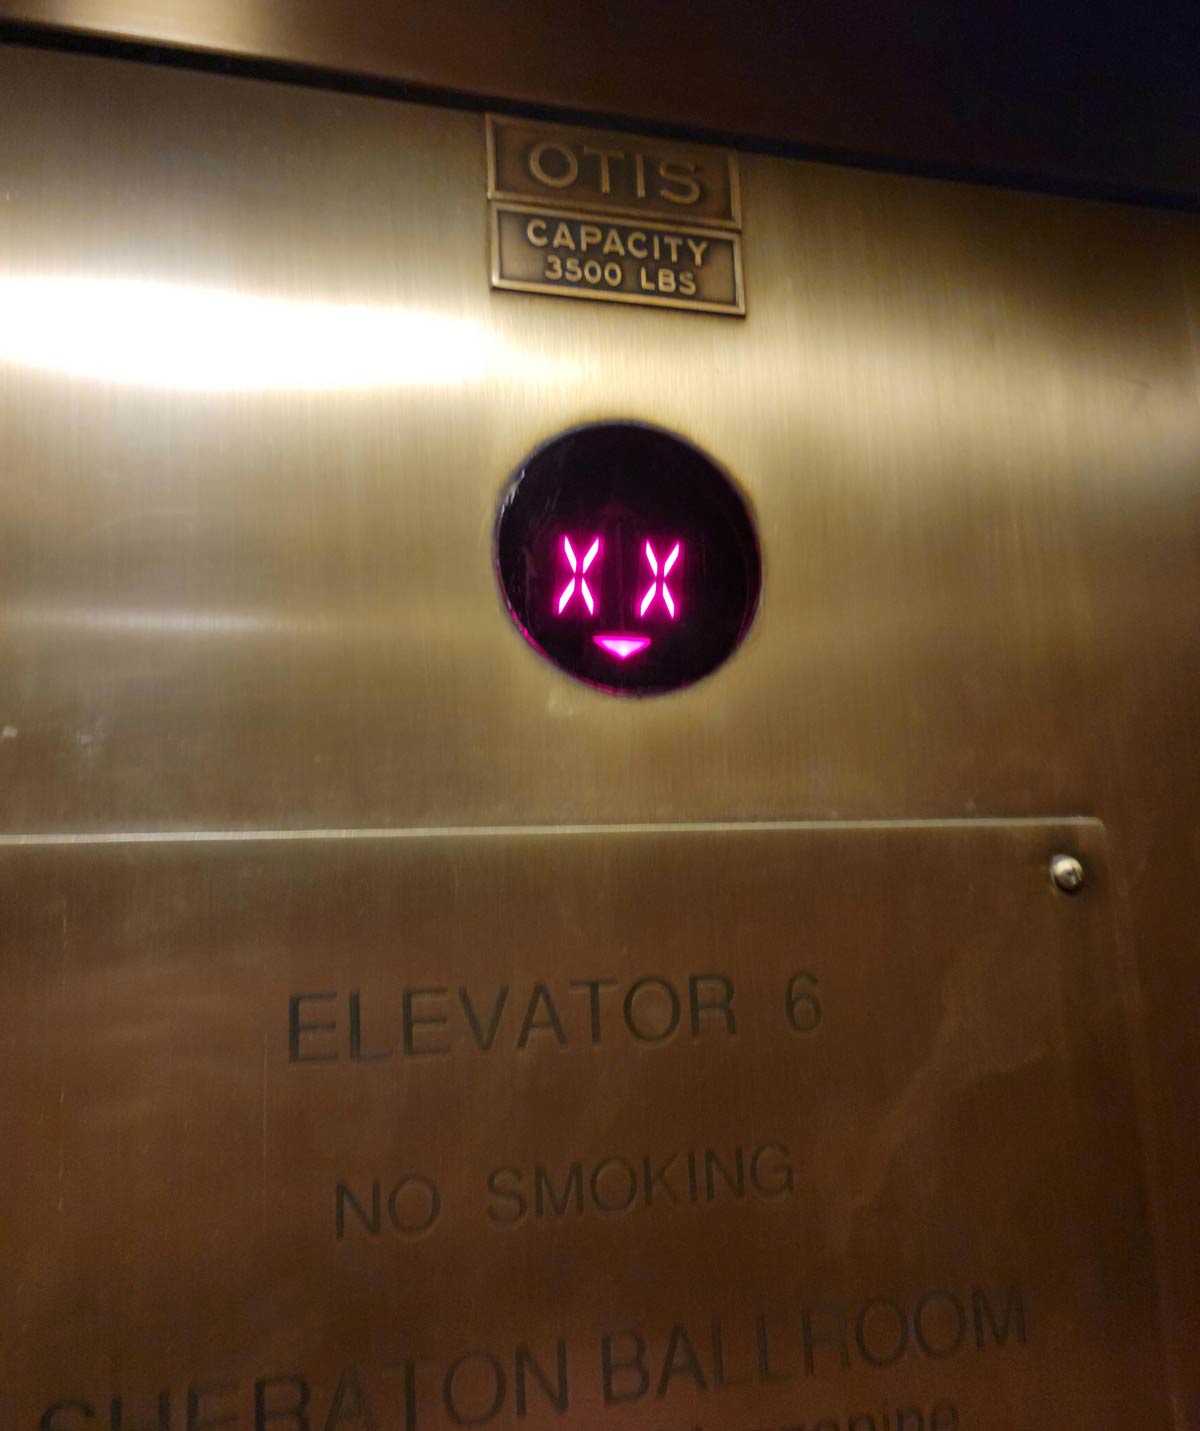 I got threatened by an elevator